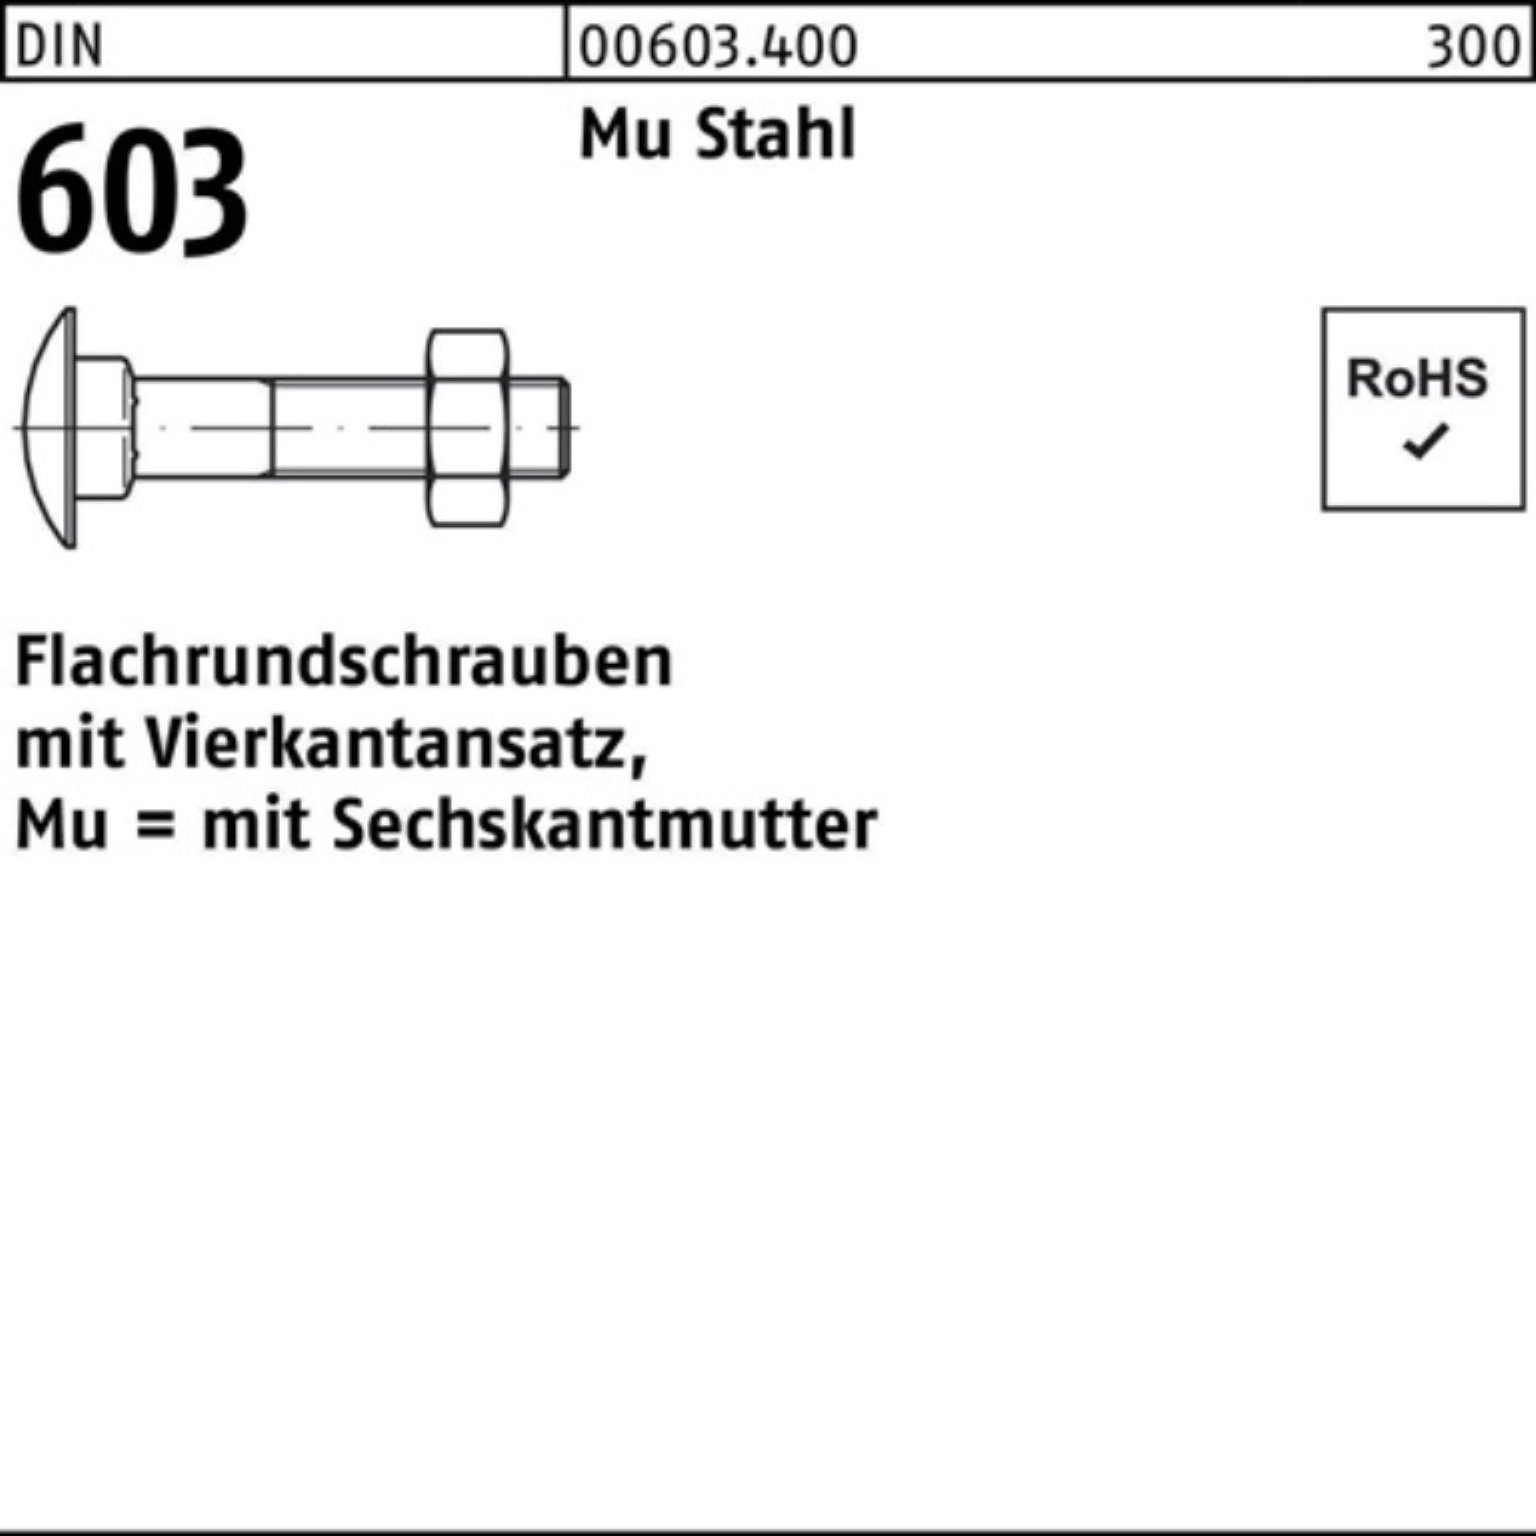 Reyher Schraube 100er 603 Vierkantansatz/6-ktmutter DIN Flachrundschraube M16x260 Pack